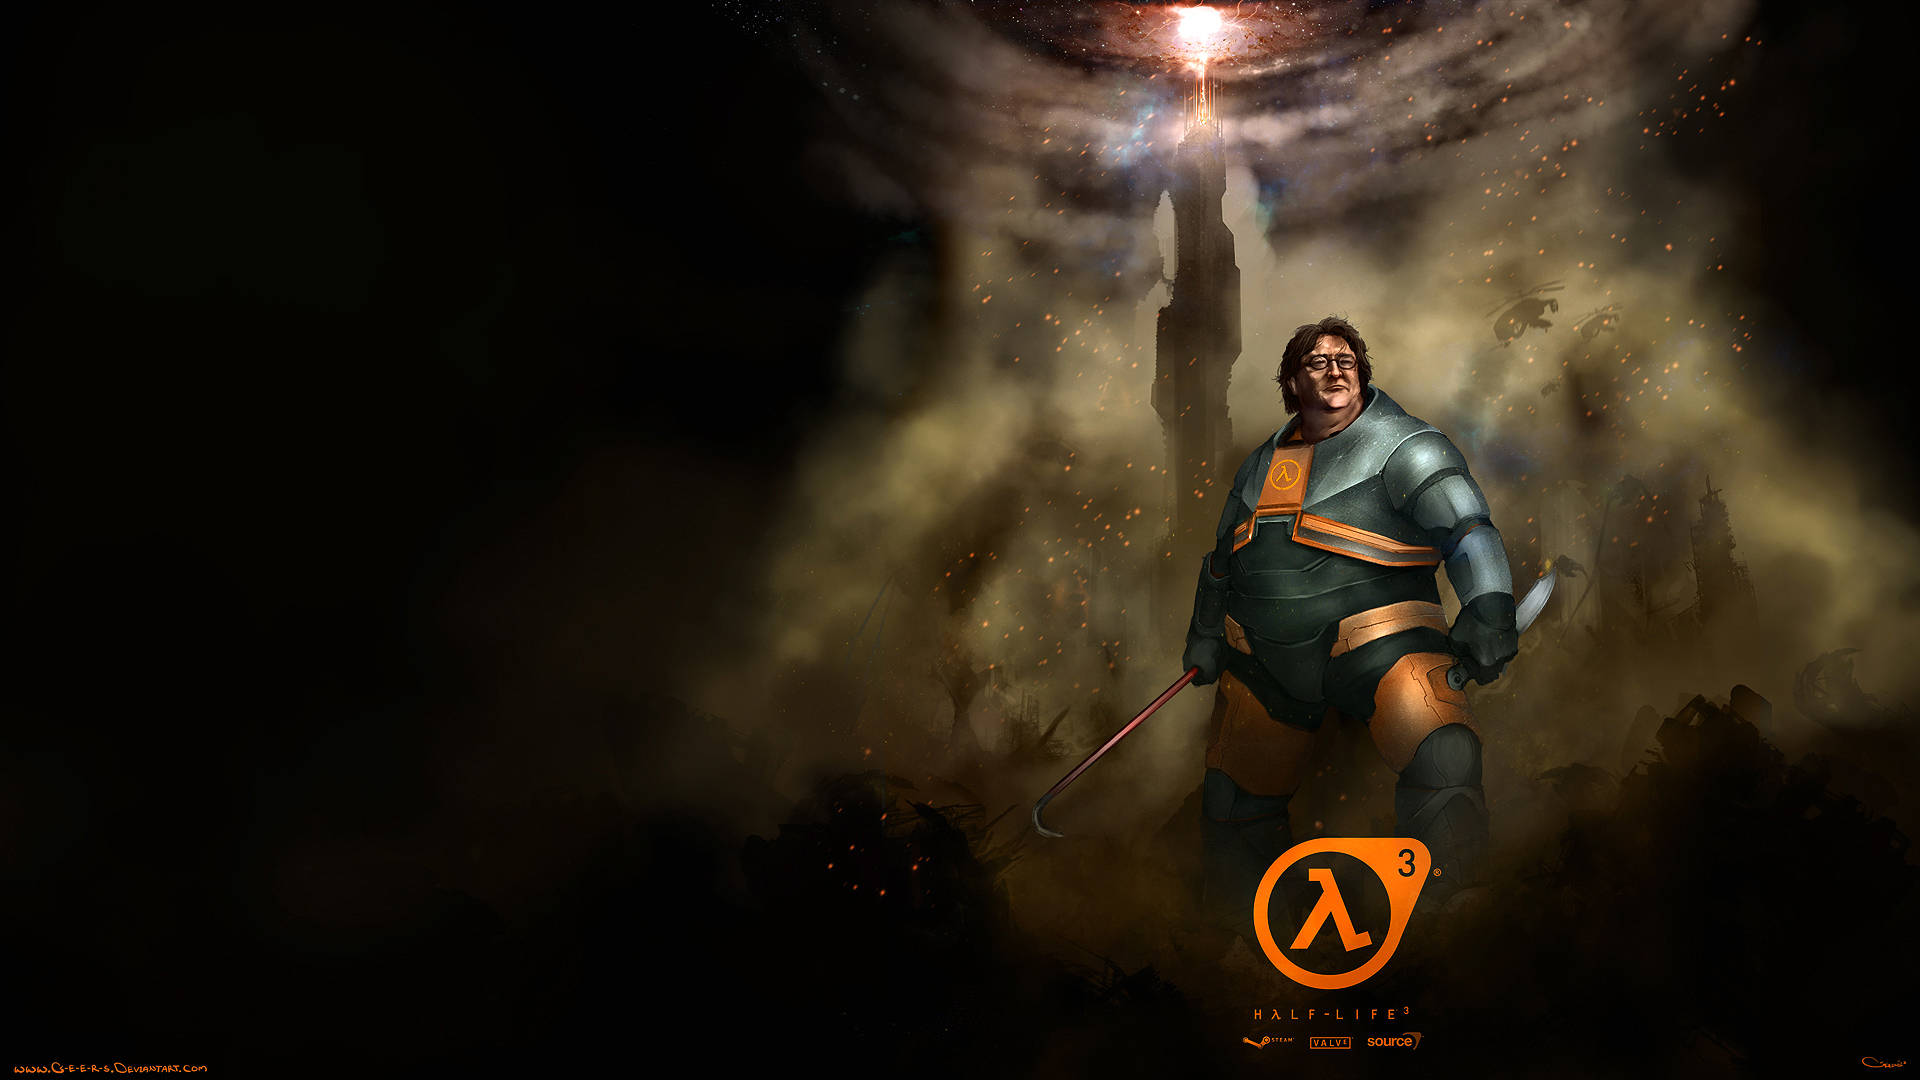 Half-life Gabe Newell Art Wallpaper